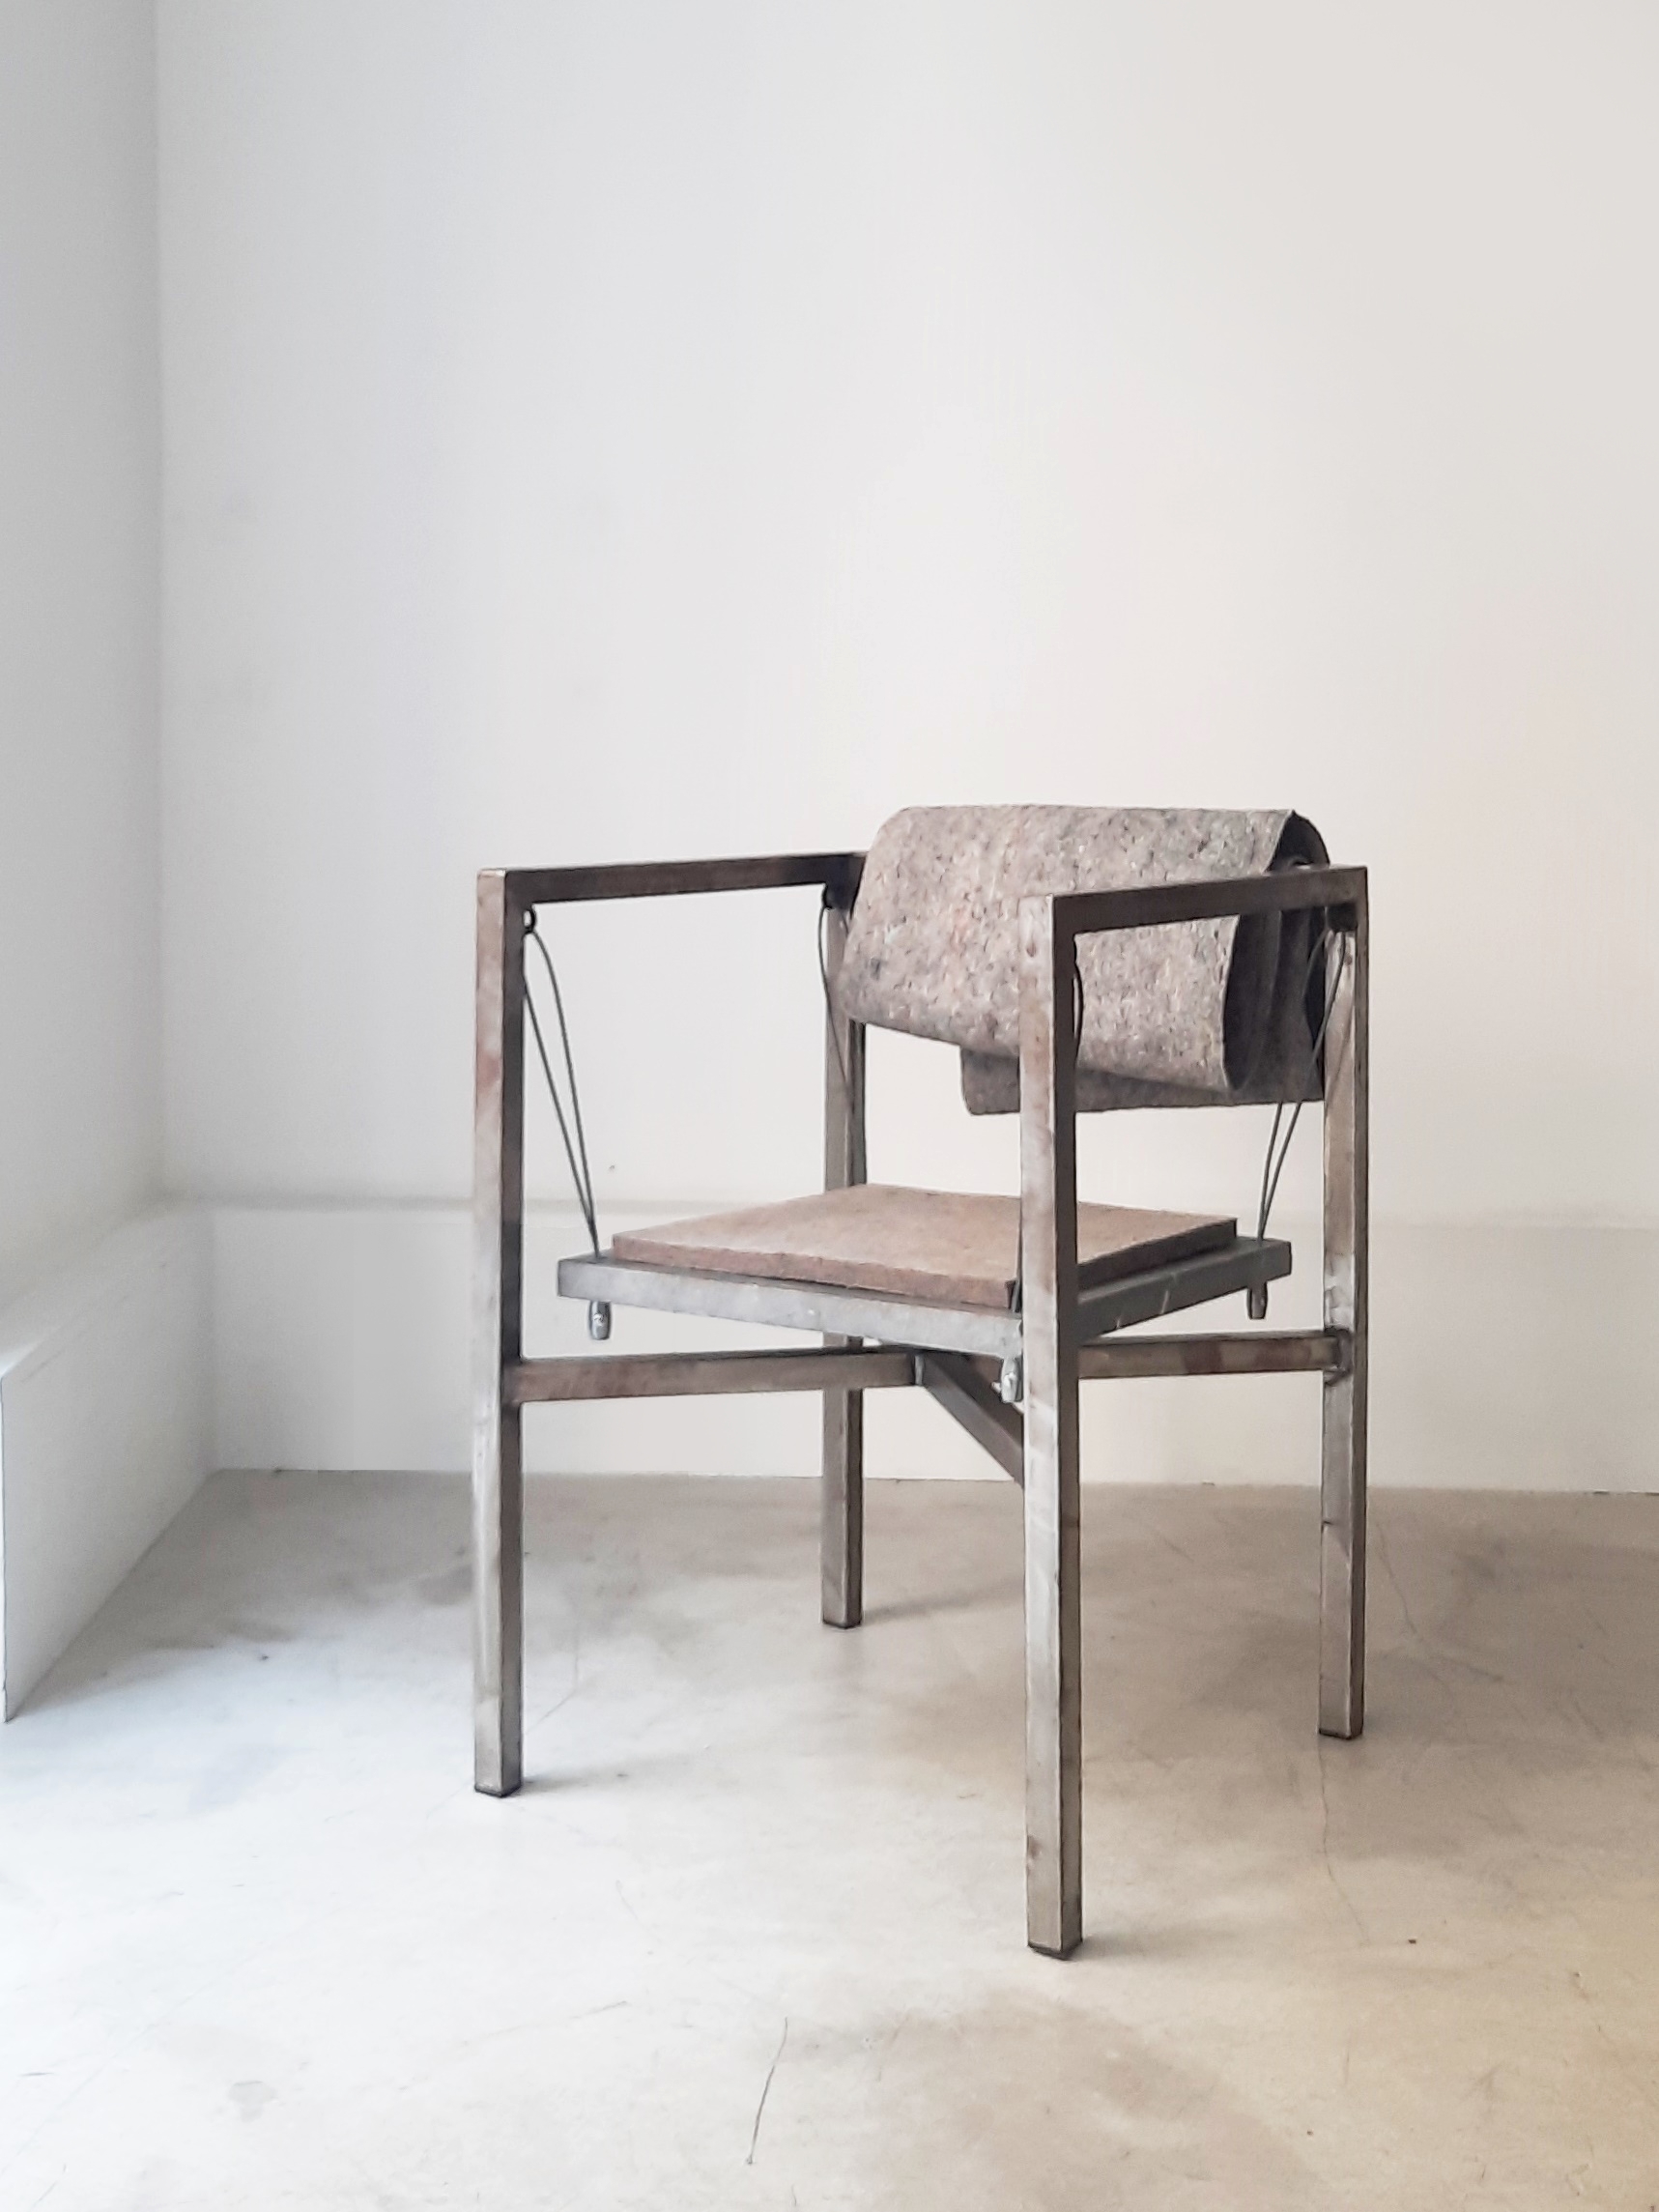 “Sensilla Museum chair” SIEBRASSE Christoph